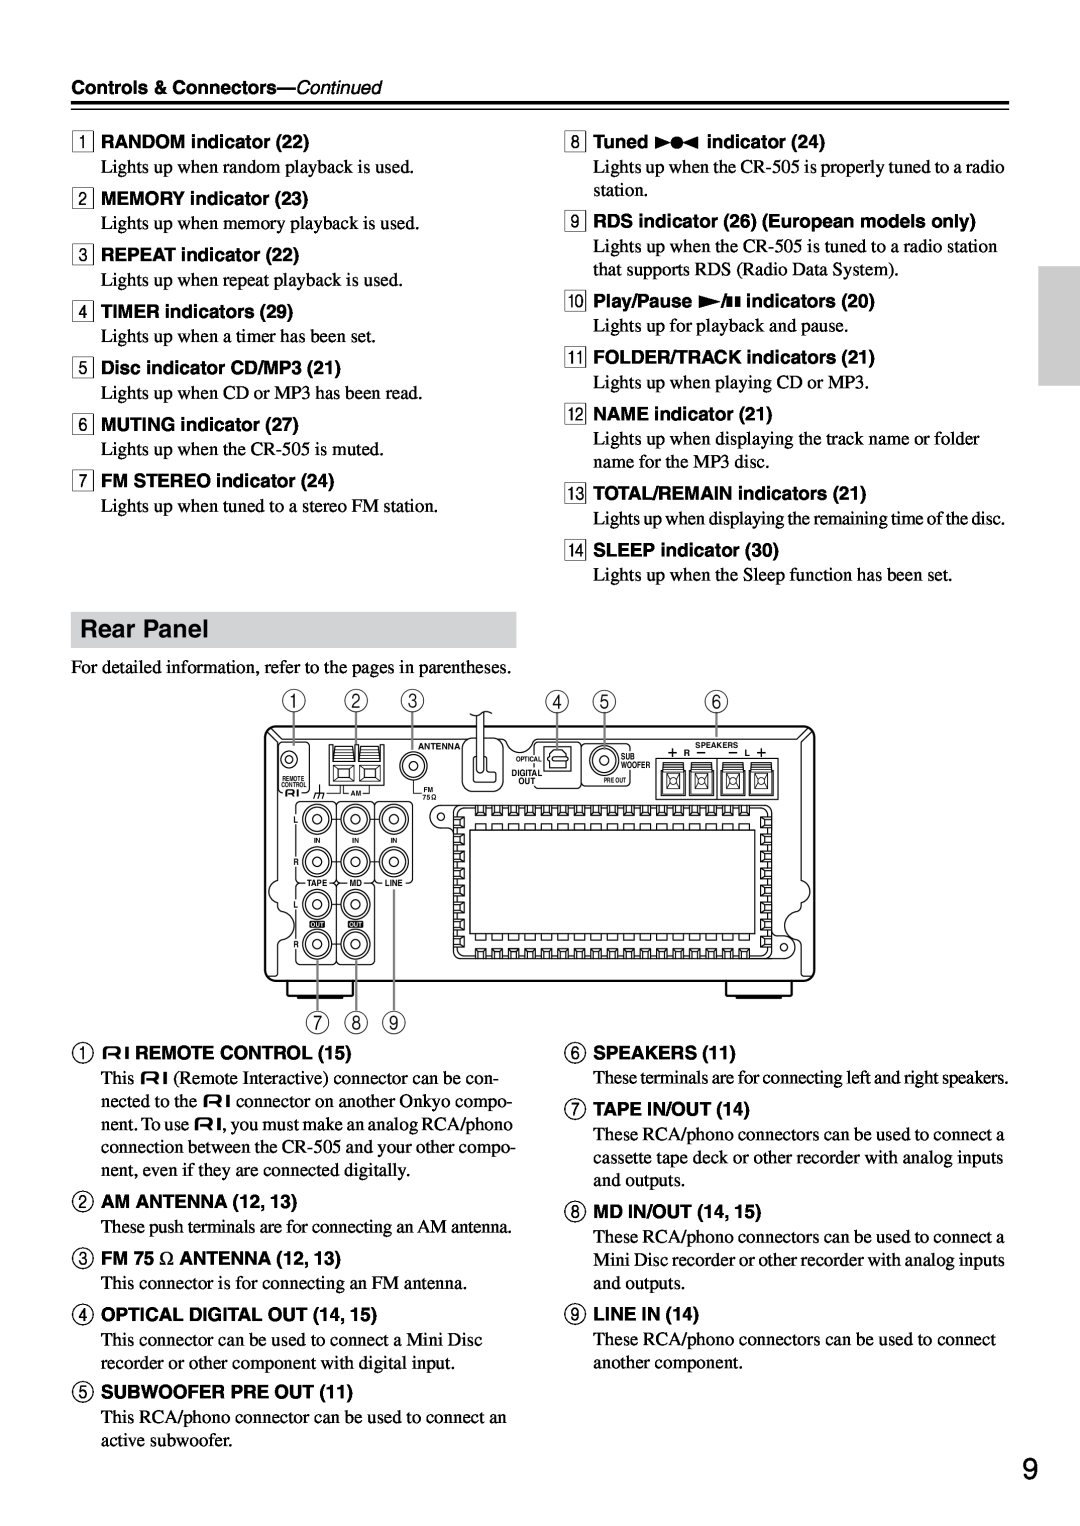 Onkyo CR-505 instruction manual Rear Panel 